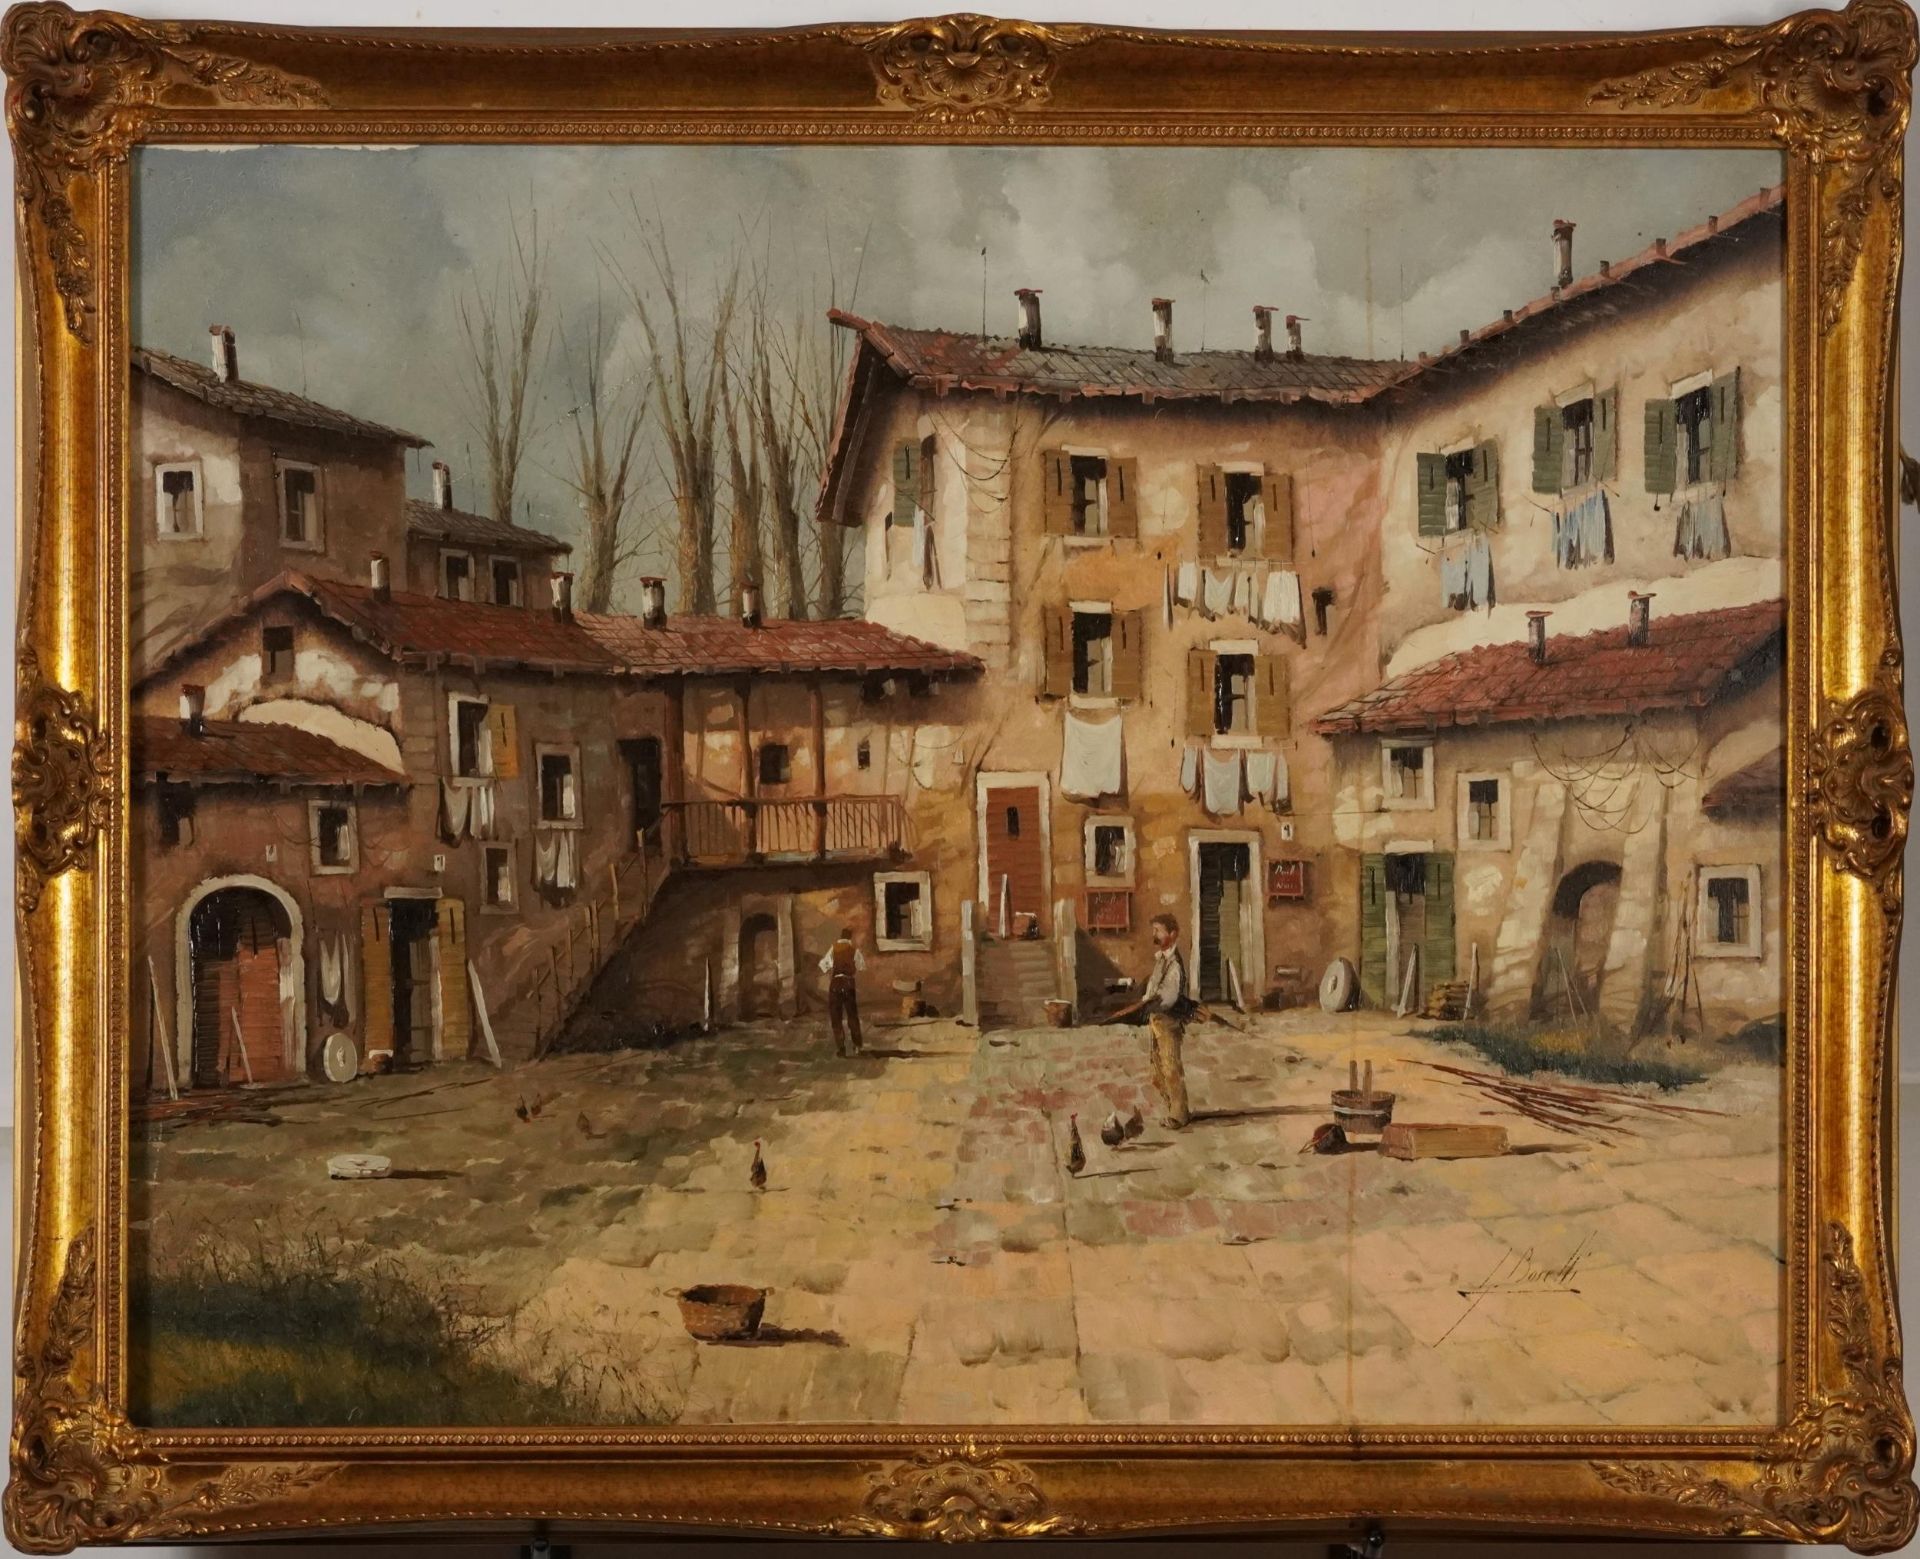 Guido Borelli - Italian courtyard, Italian Impressionist oil on canvas, framed, 80cm x 60cm - Image 2 of 5